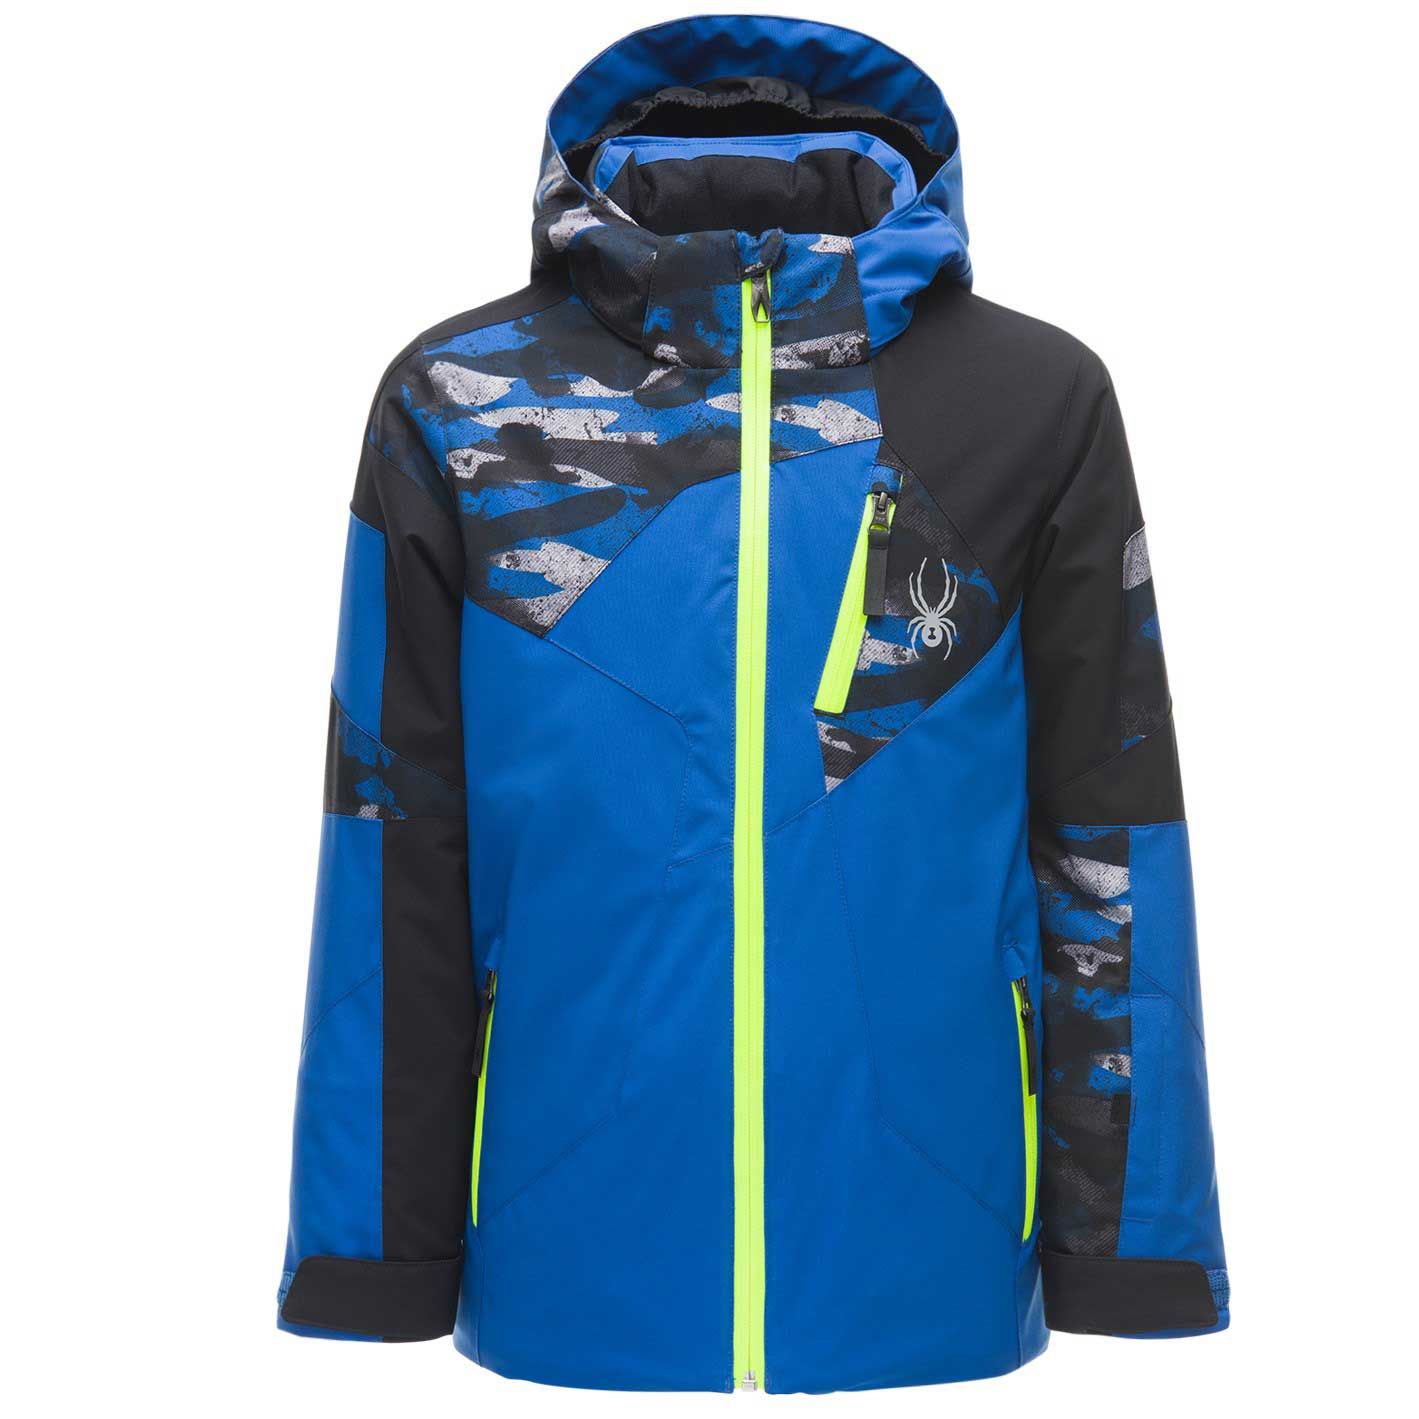 Veste ski garçon K Boy's Leader Jacket - Bleu/Noir